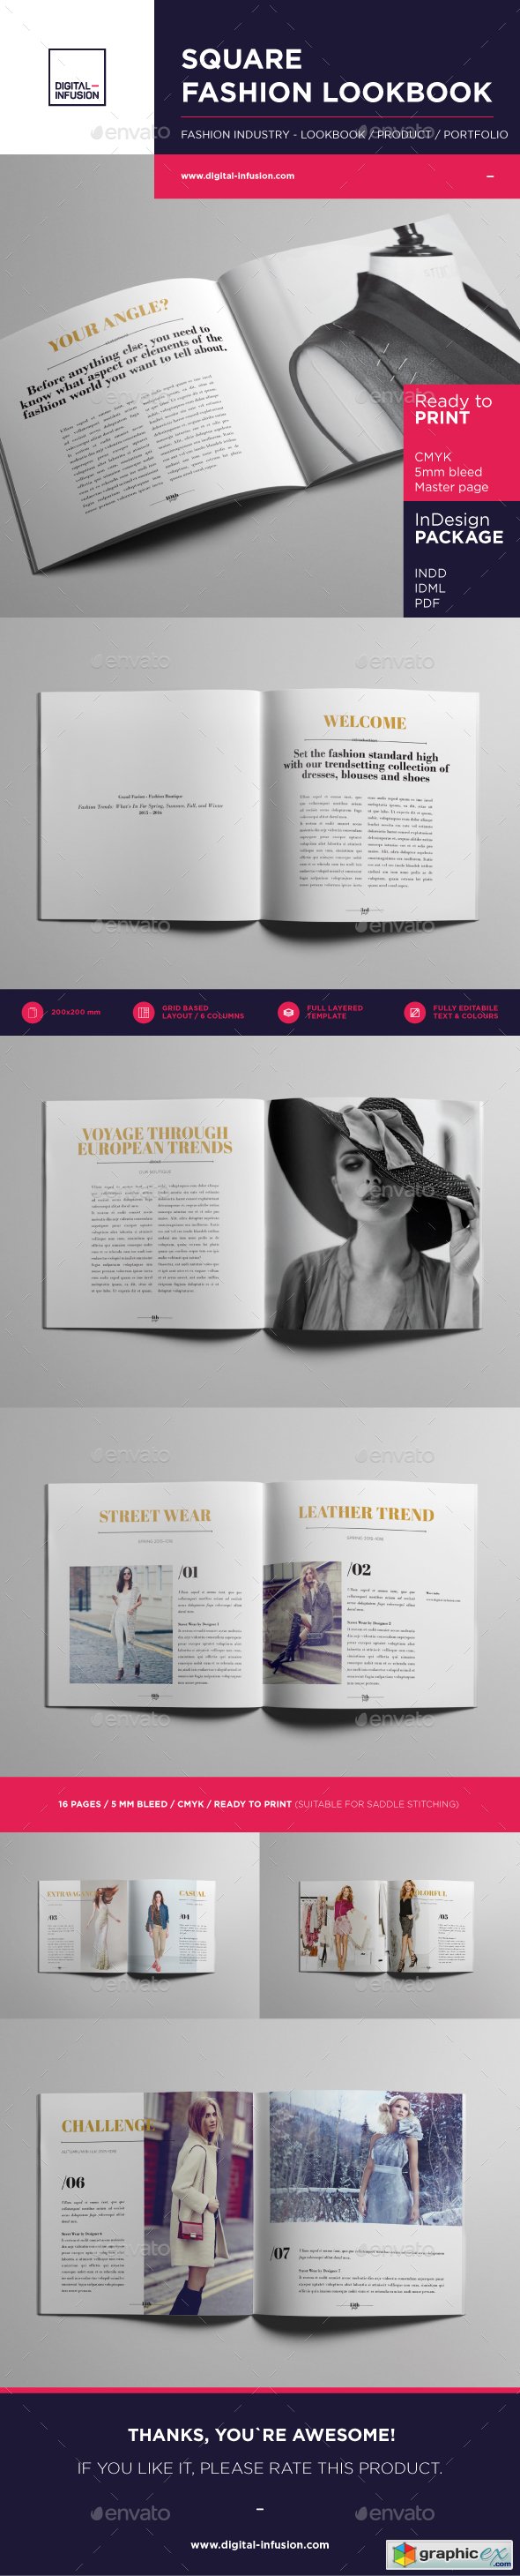 Square Fashion Lookbook Product Book